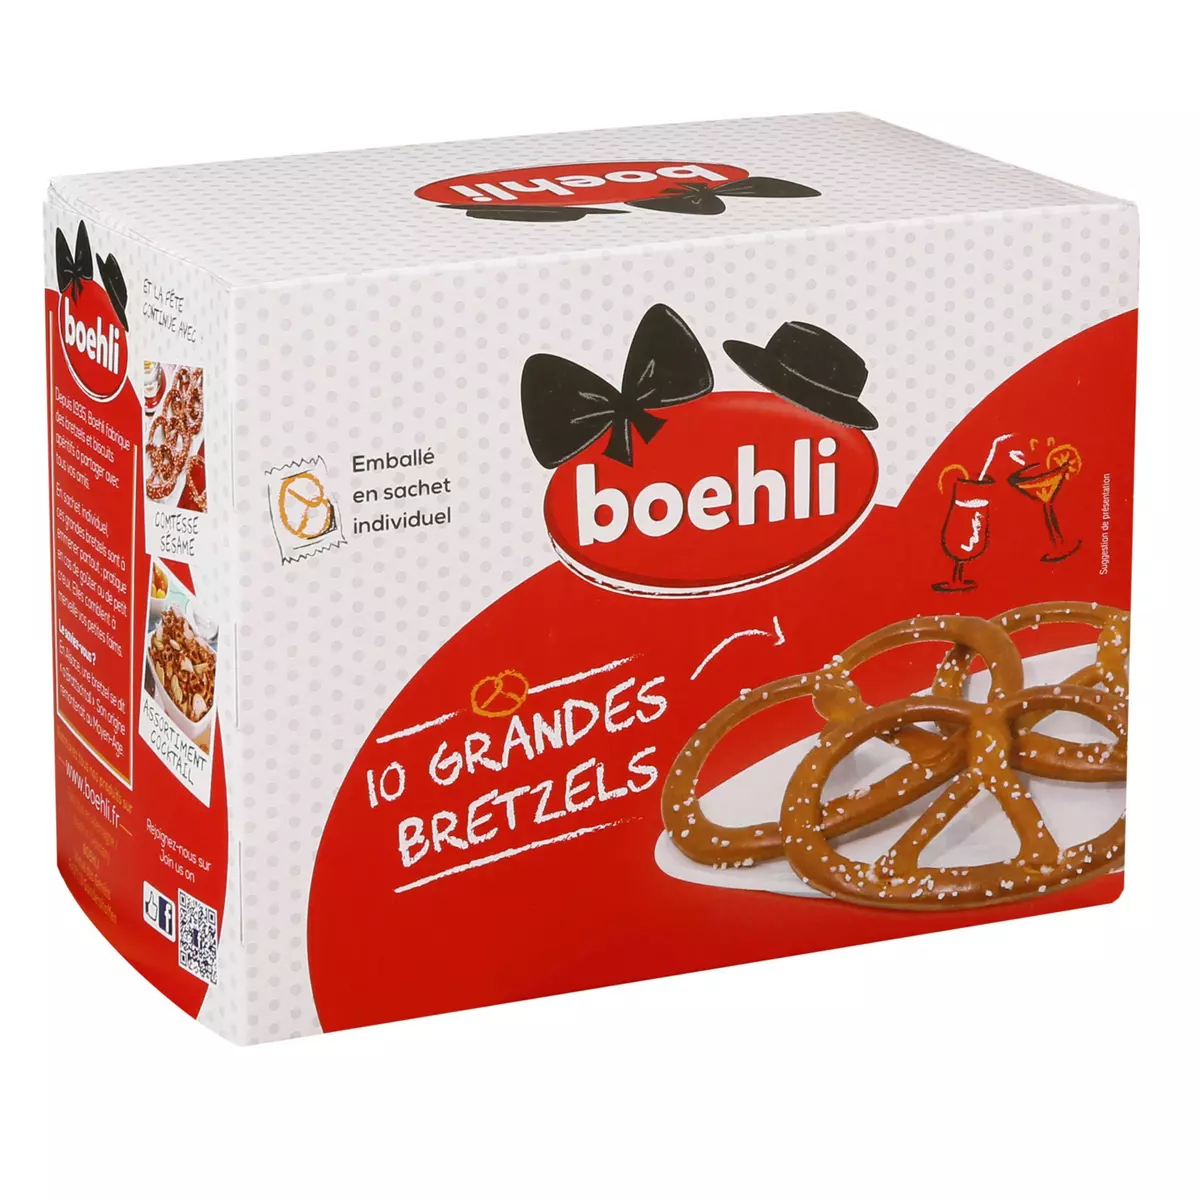 BOEHLI Grands bretzels 10 sachets 200g